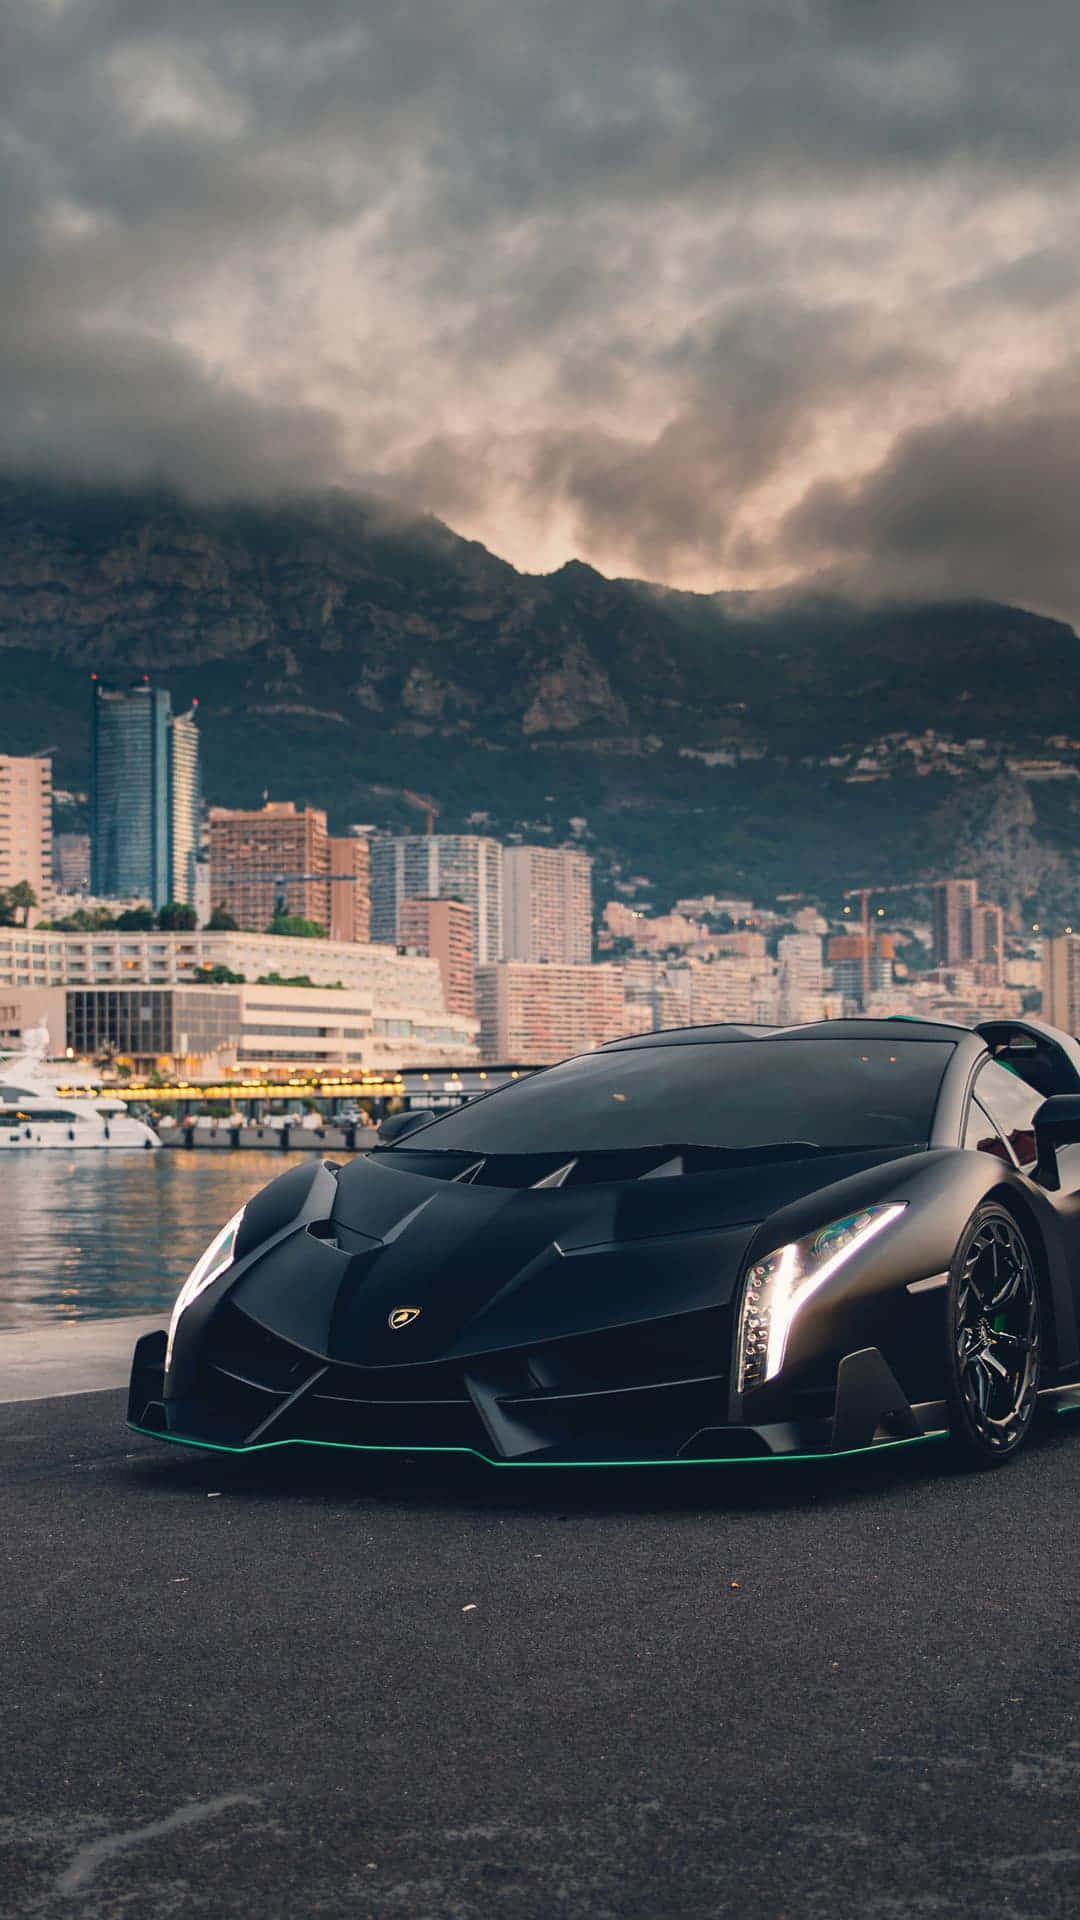 Enjoy 4K Ultra High Res Quality with the Pixel 3XL Lamborghini